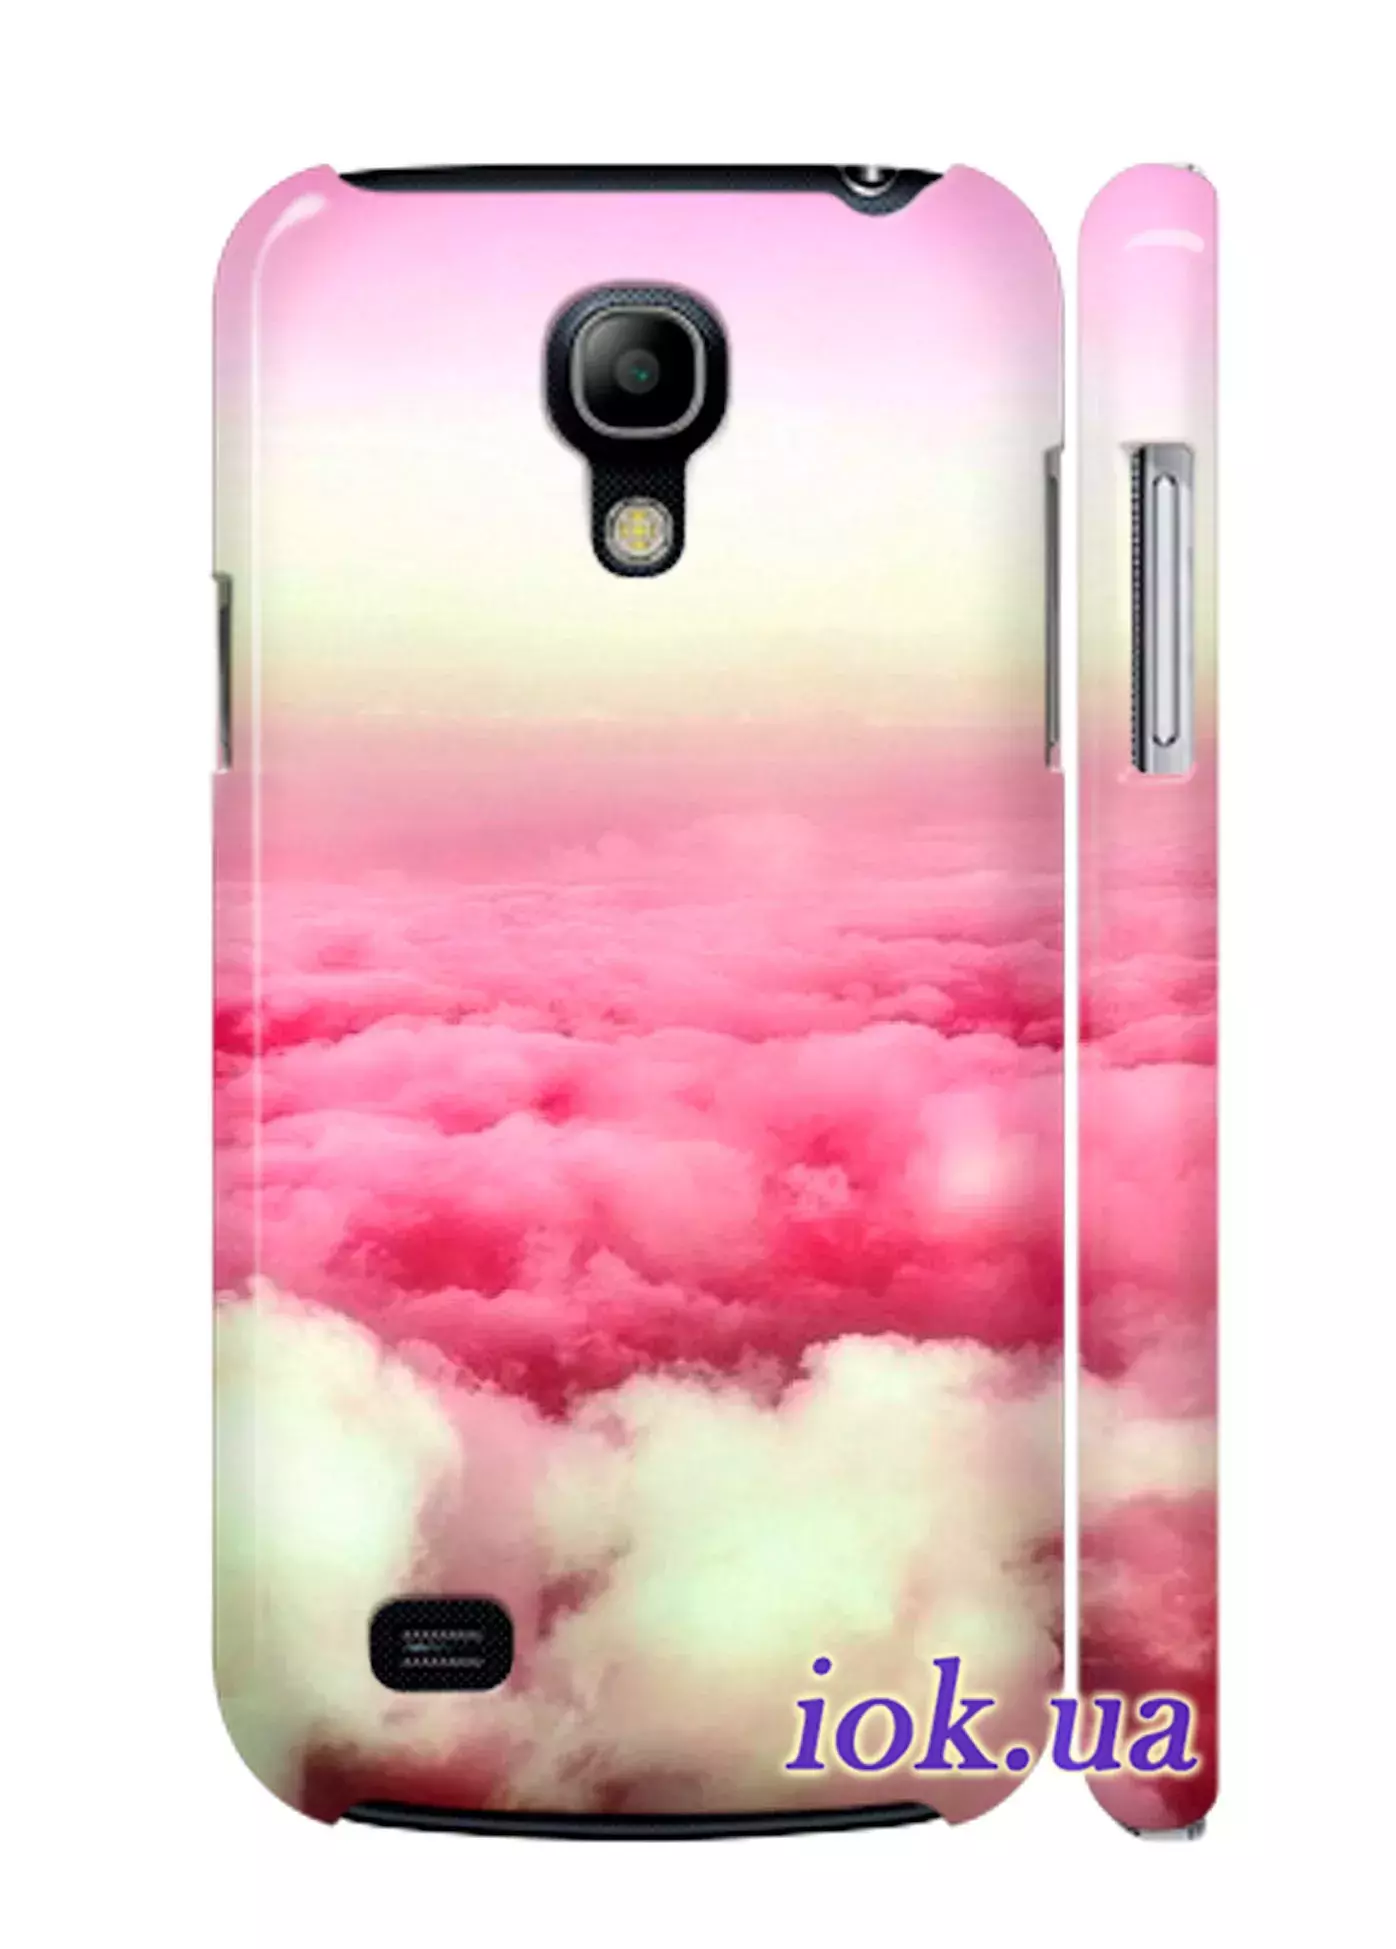 Чехол на Galaxy S4 mini - Розовые облака